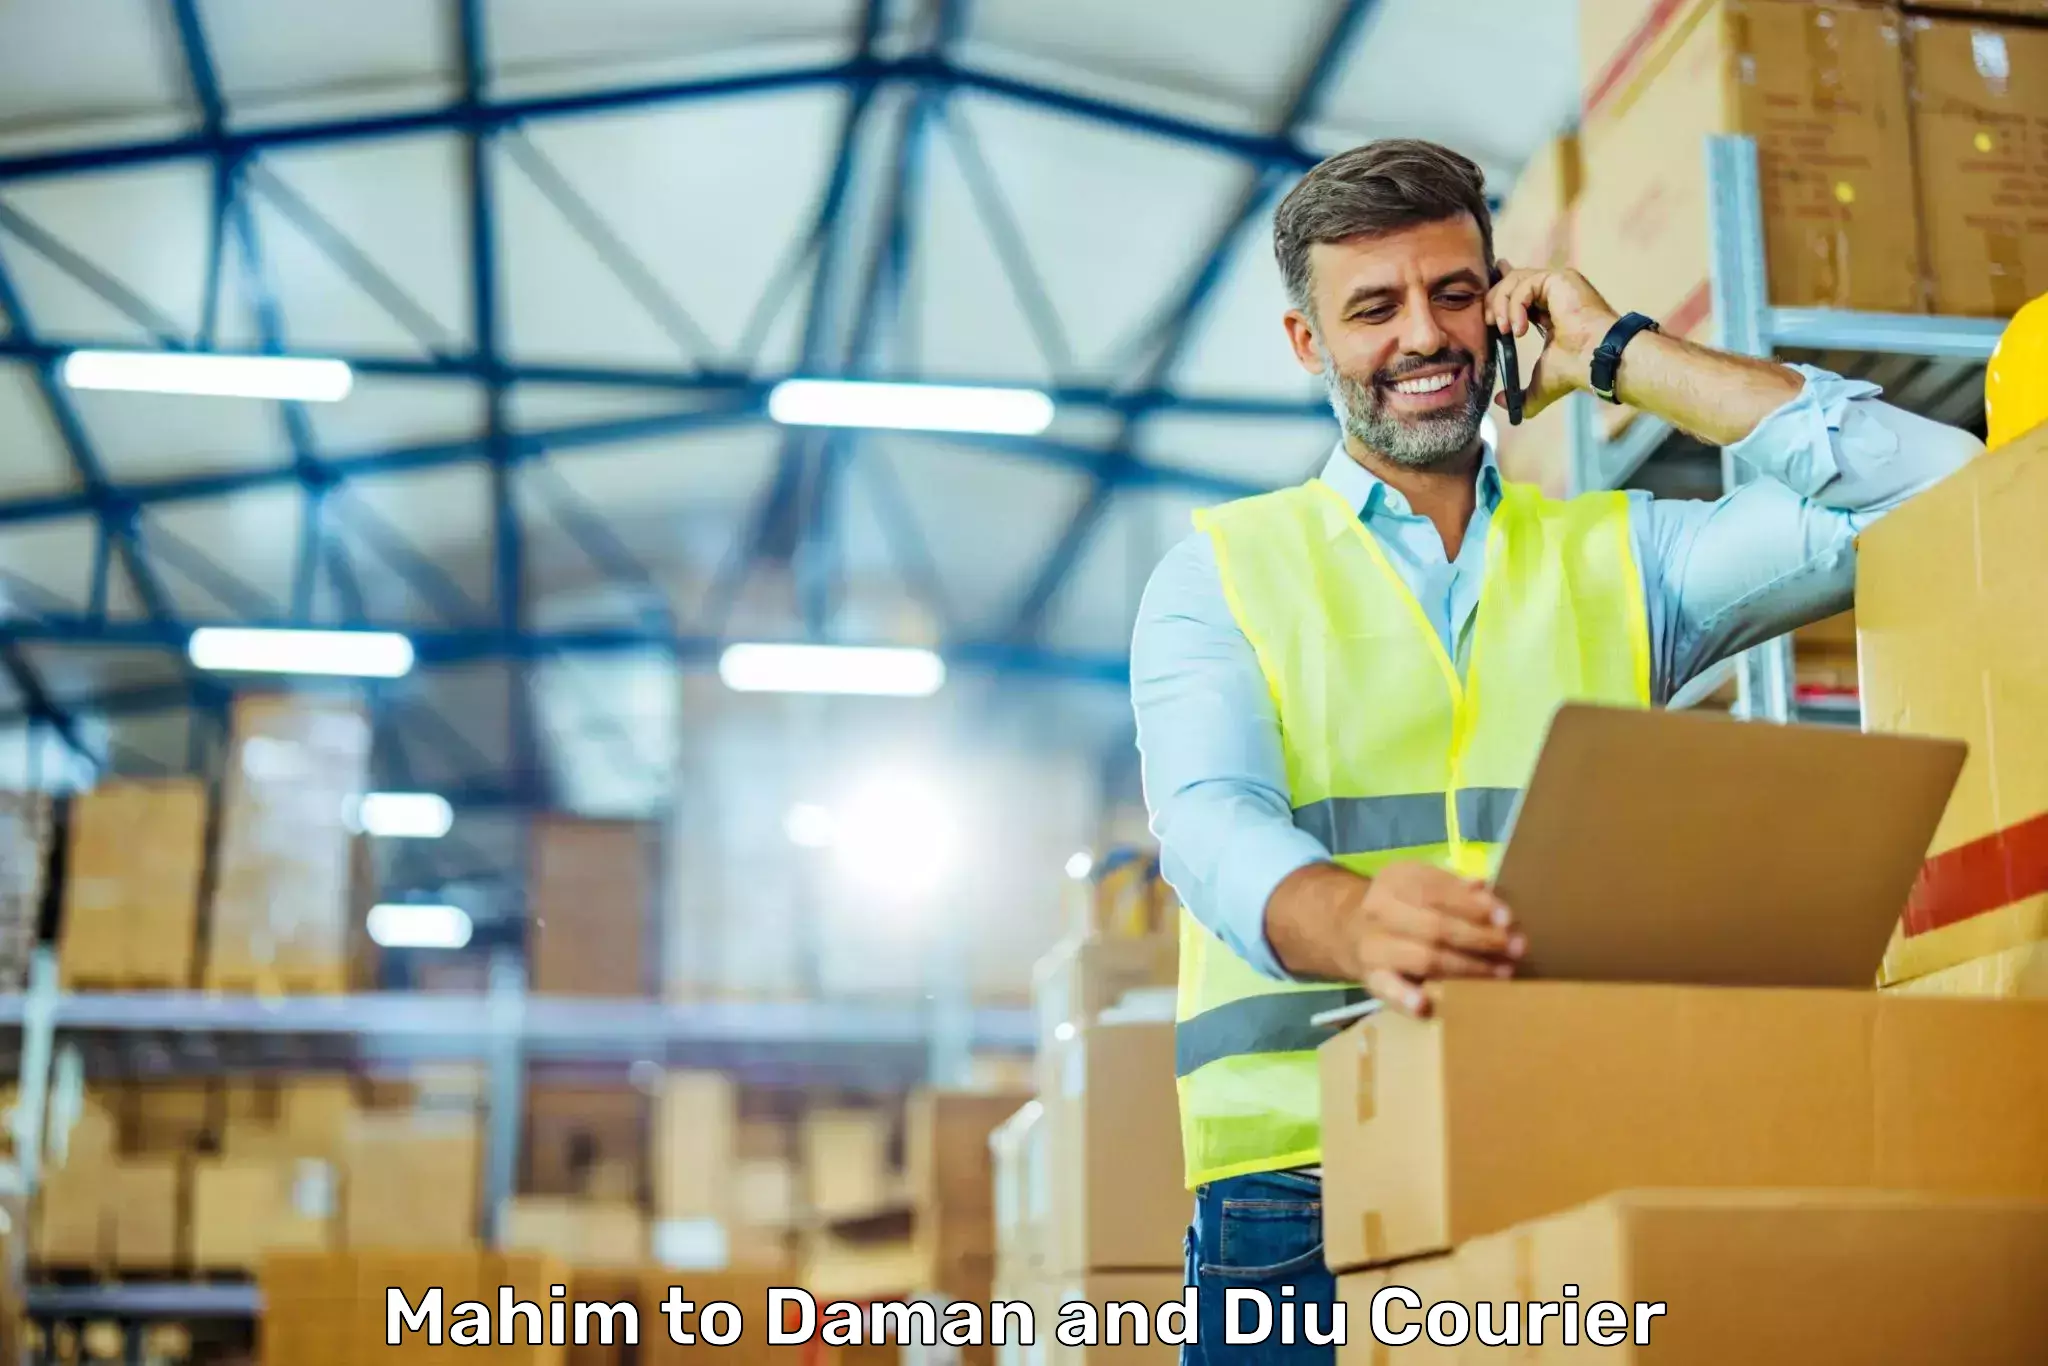 Global logistics network Mahim to Diu